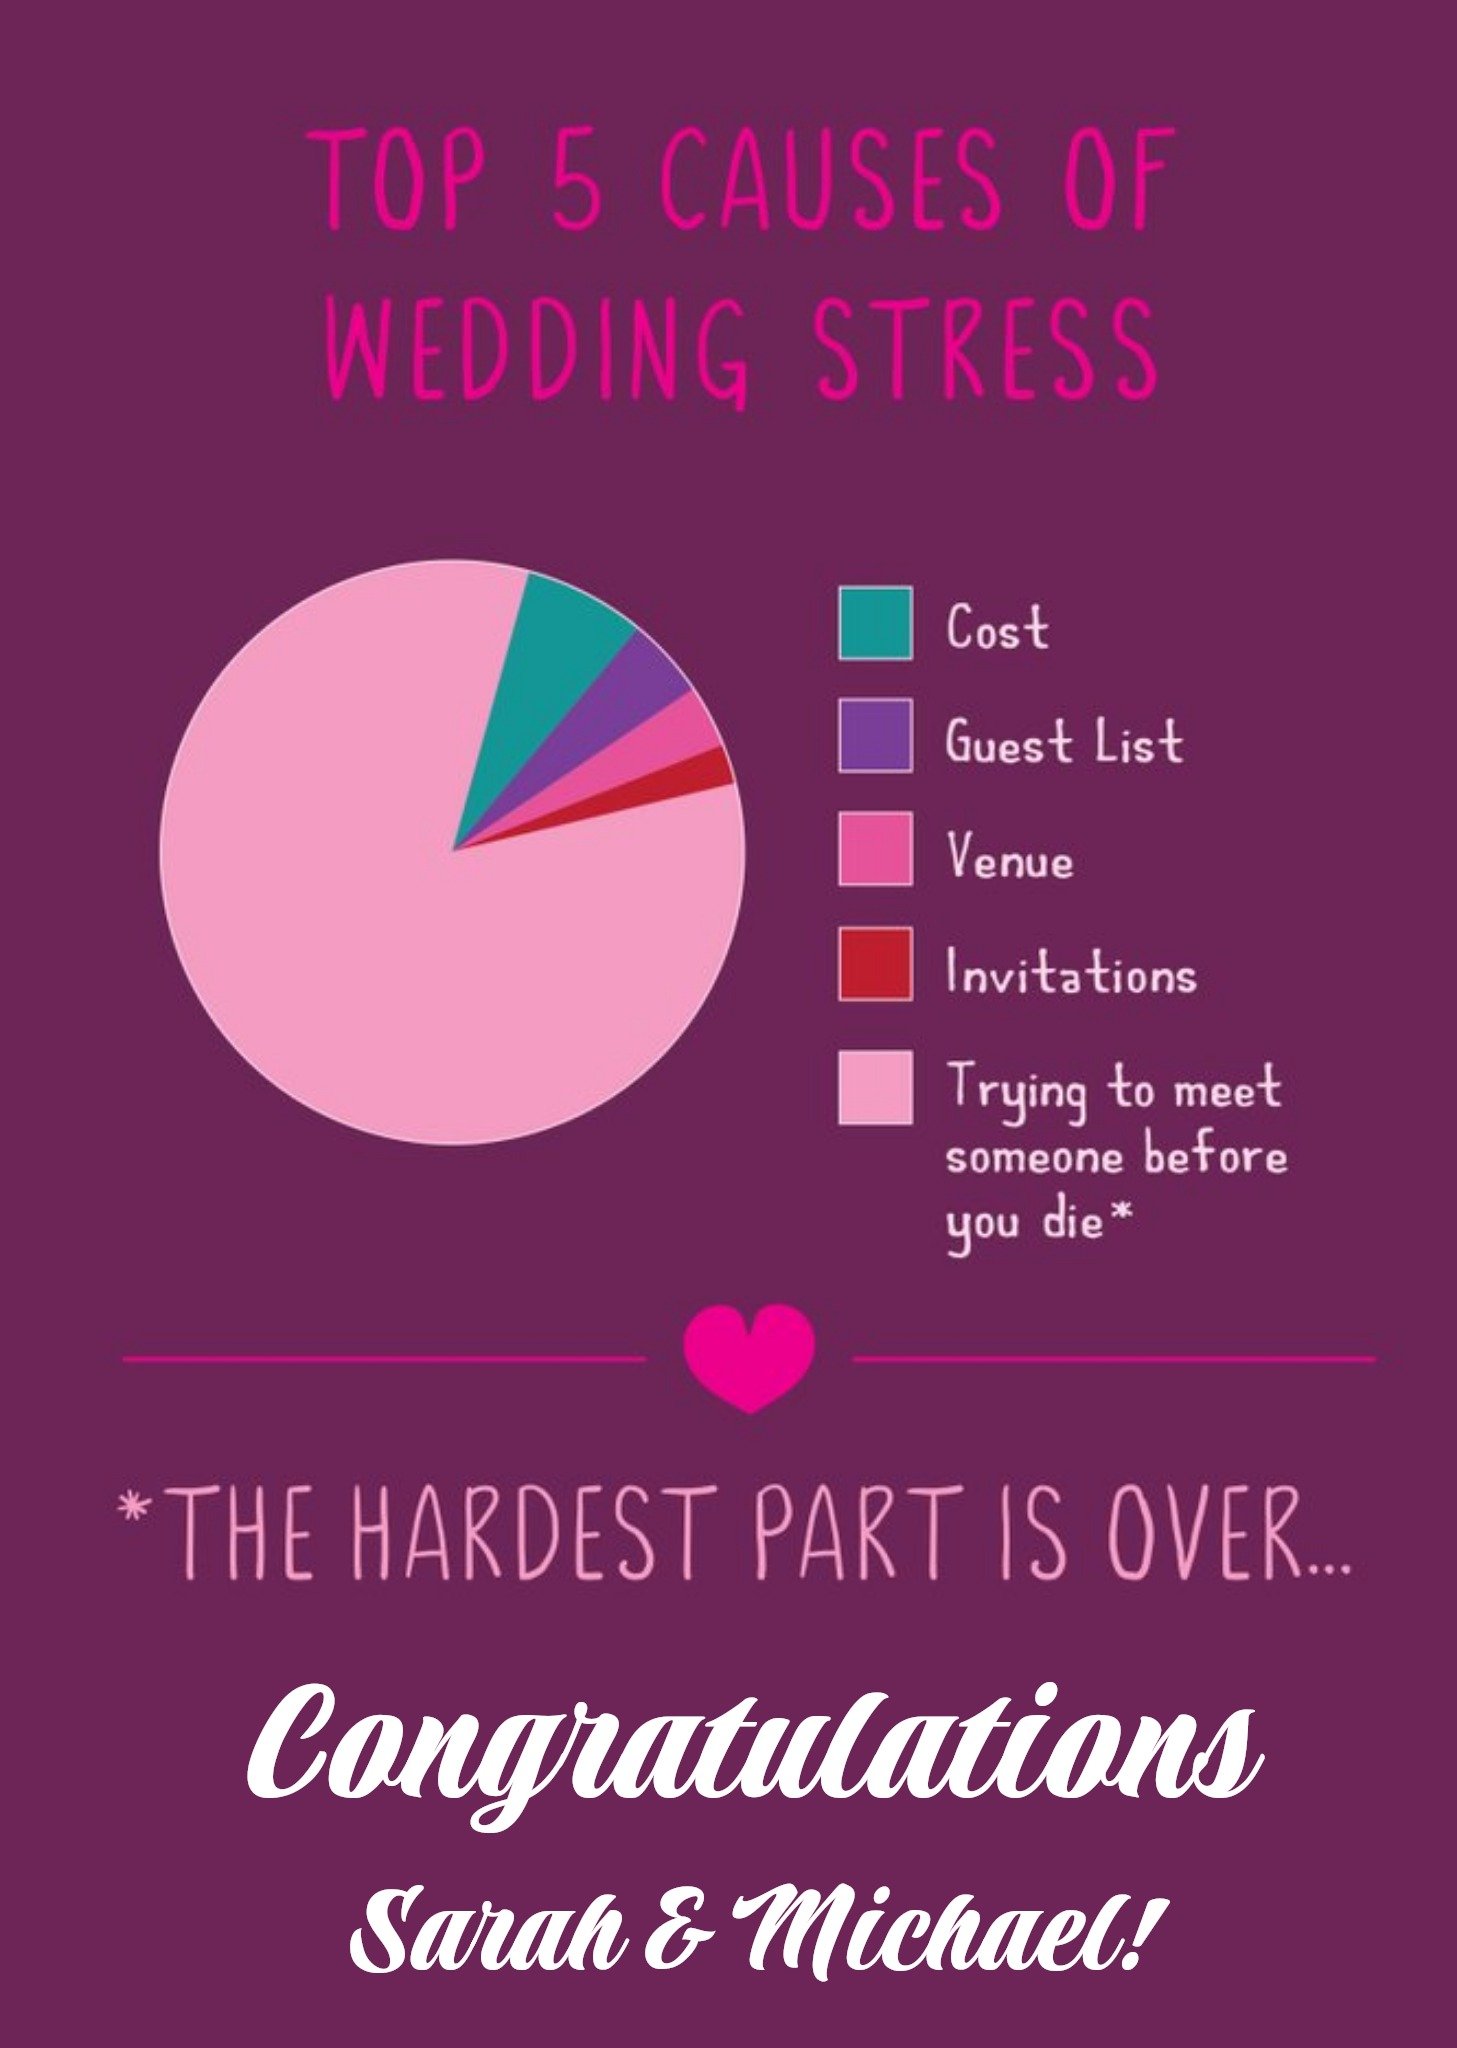 Moonpig Top 5 Causes Of Wedding Stress - Congratulations, Large Card